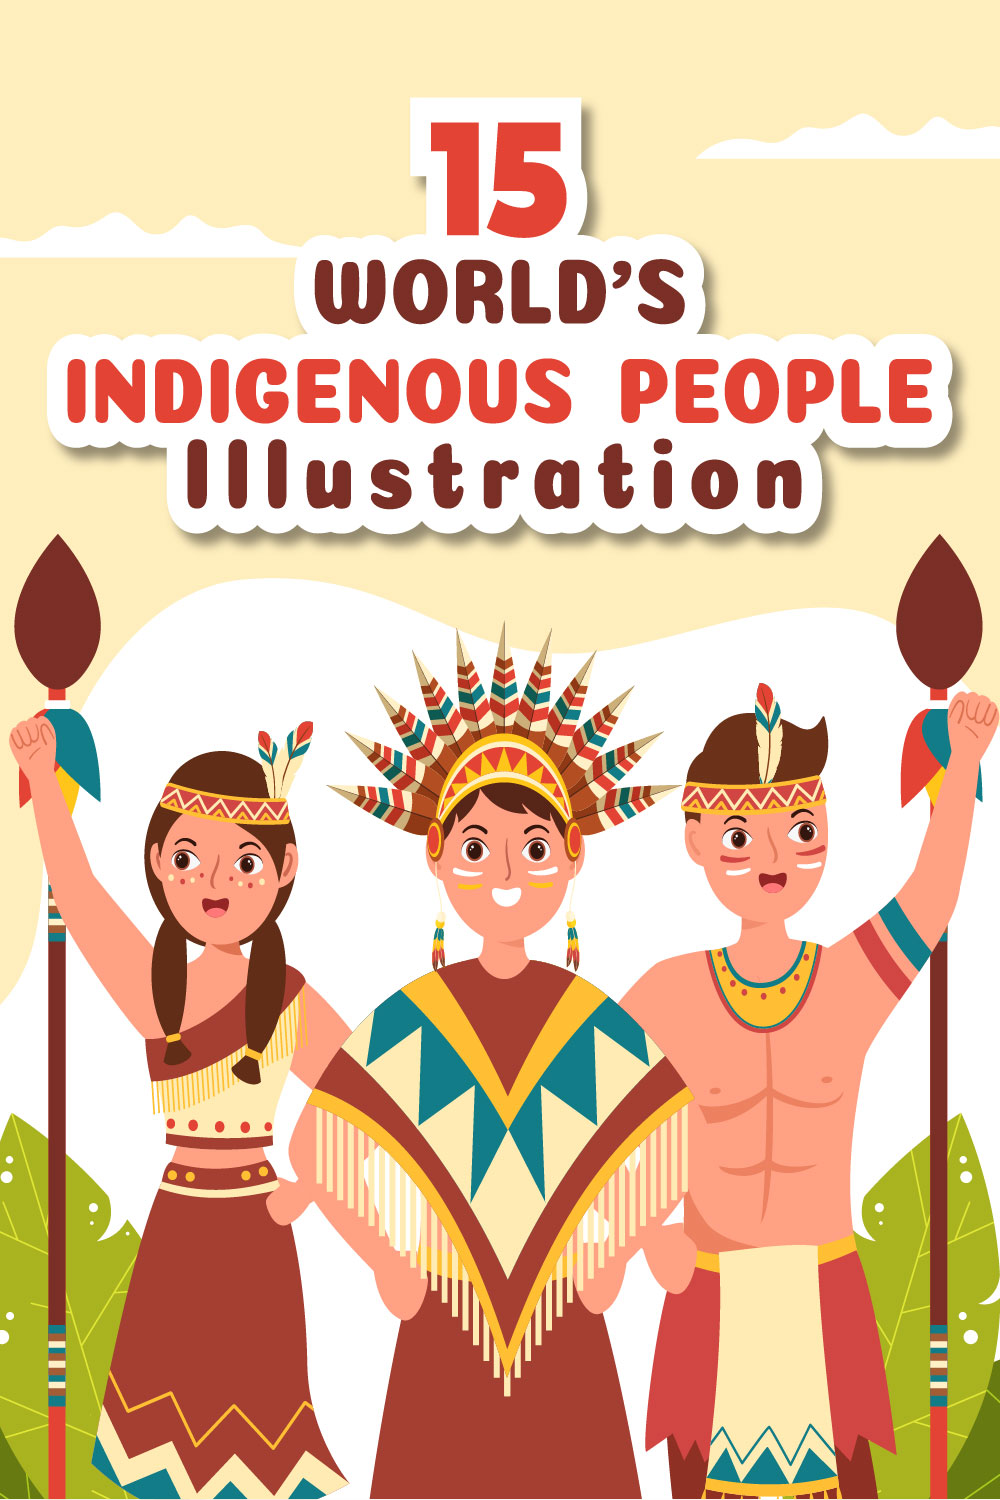 15 Worlds Indigenous Peoples Day Illustration Pinterest Image.